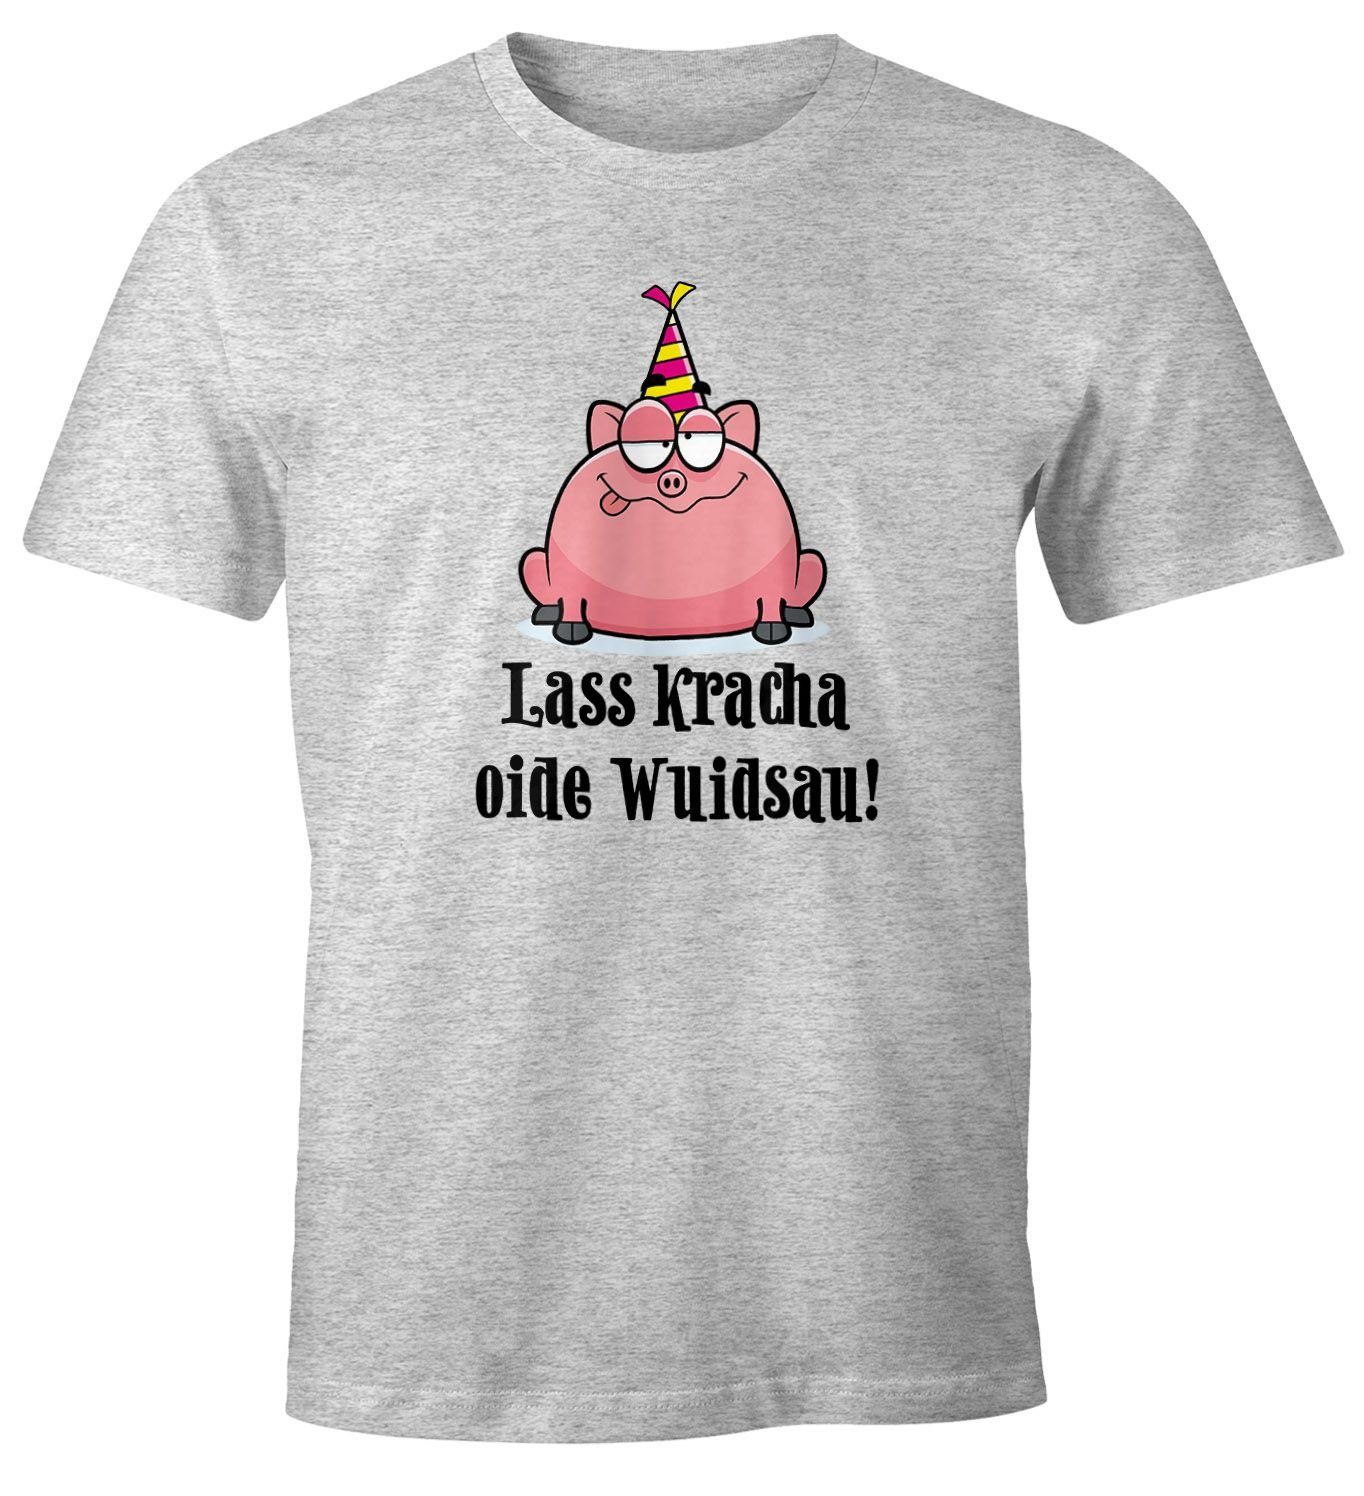 MoonWorks Print-Shirt Herren T-Shirt Geburtstag Schwein Spruch Lass kracha oide Wuidsau Fun-Shirt Geschenk Moonworks® mit Print grau | T-Shirts